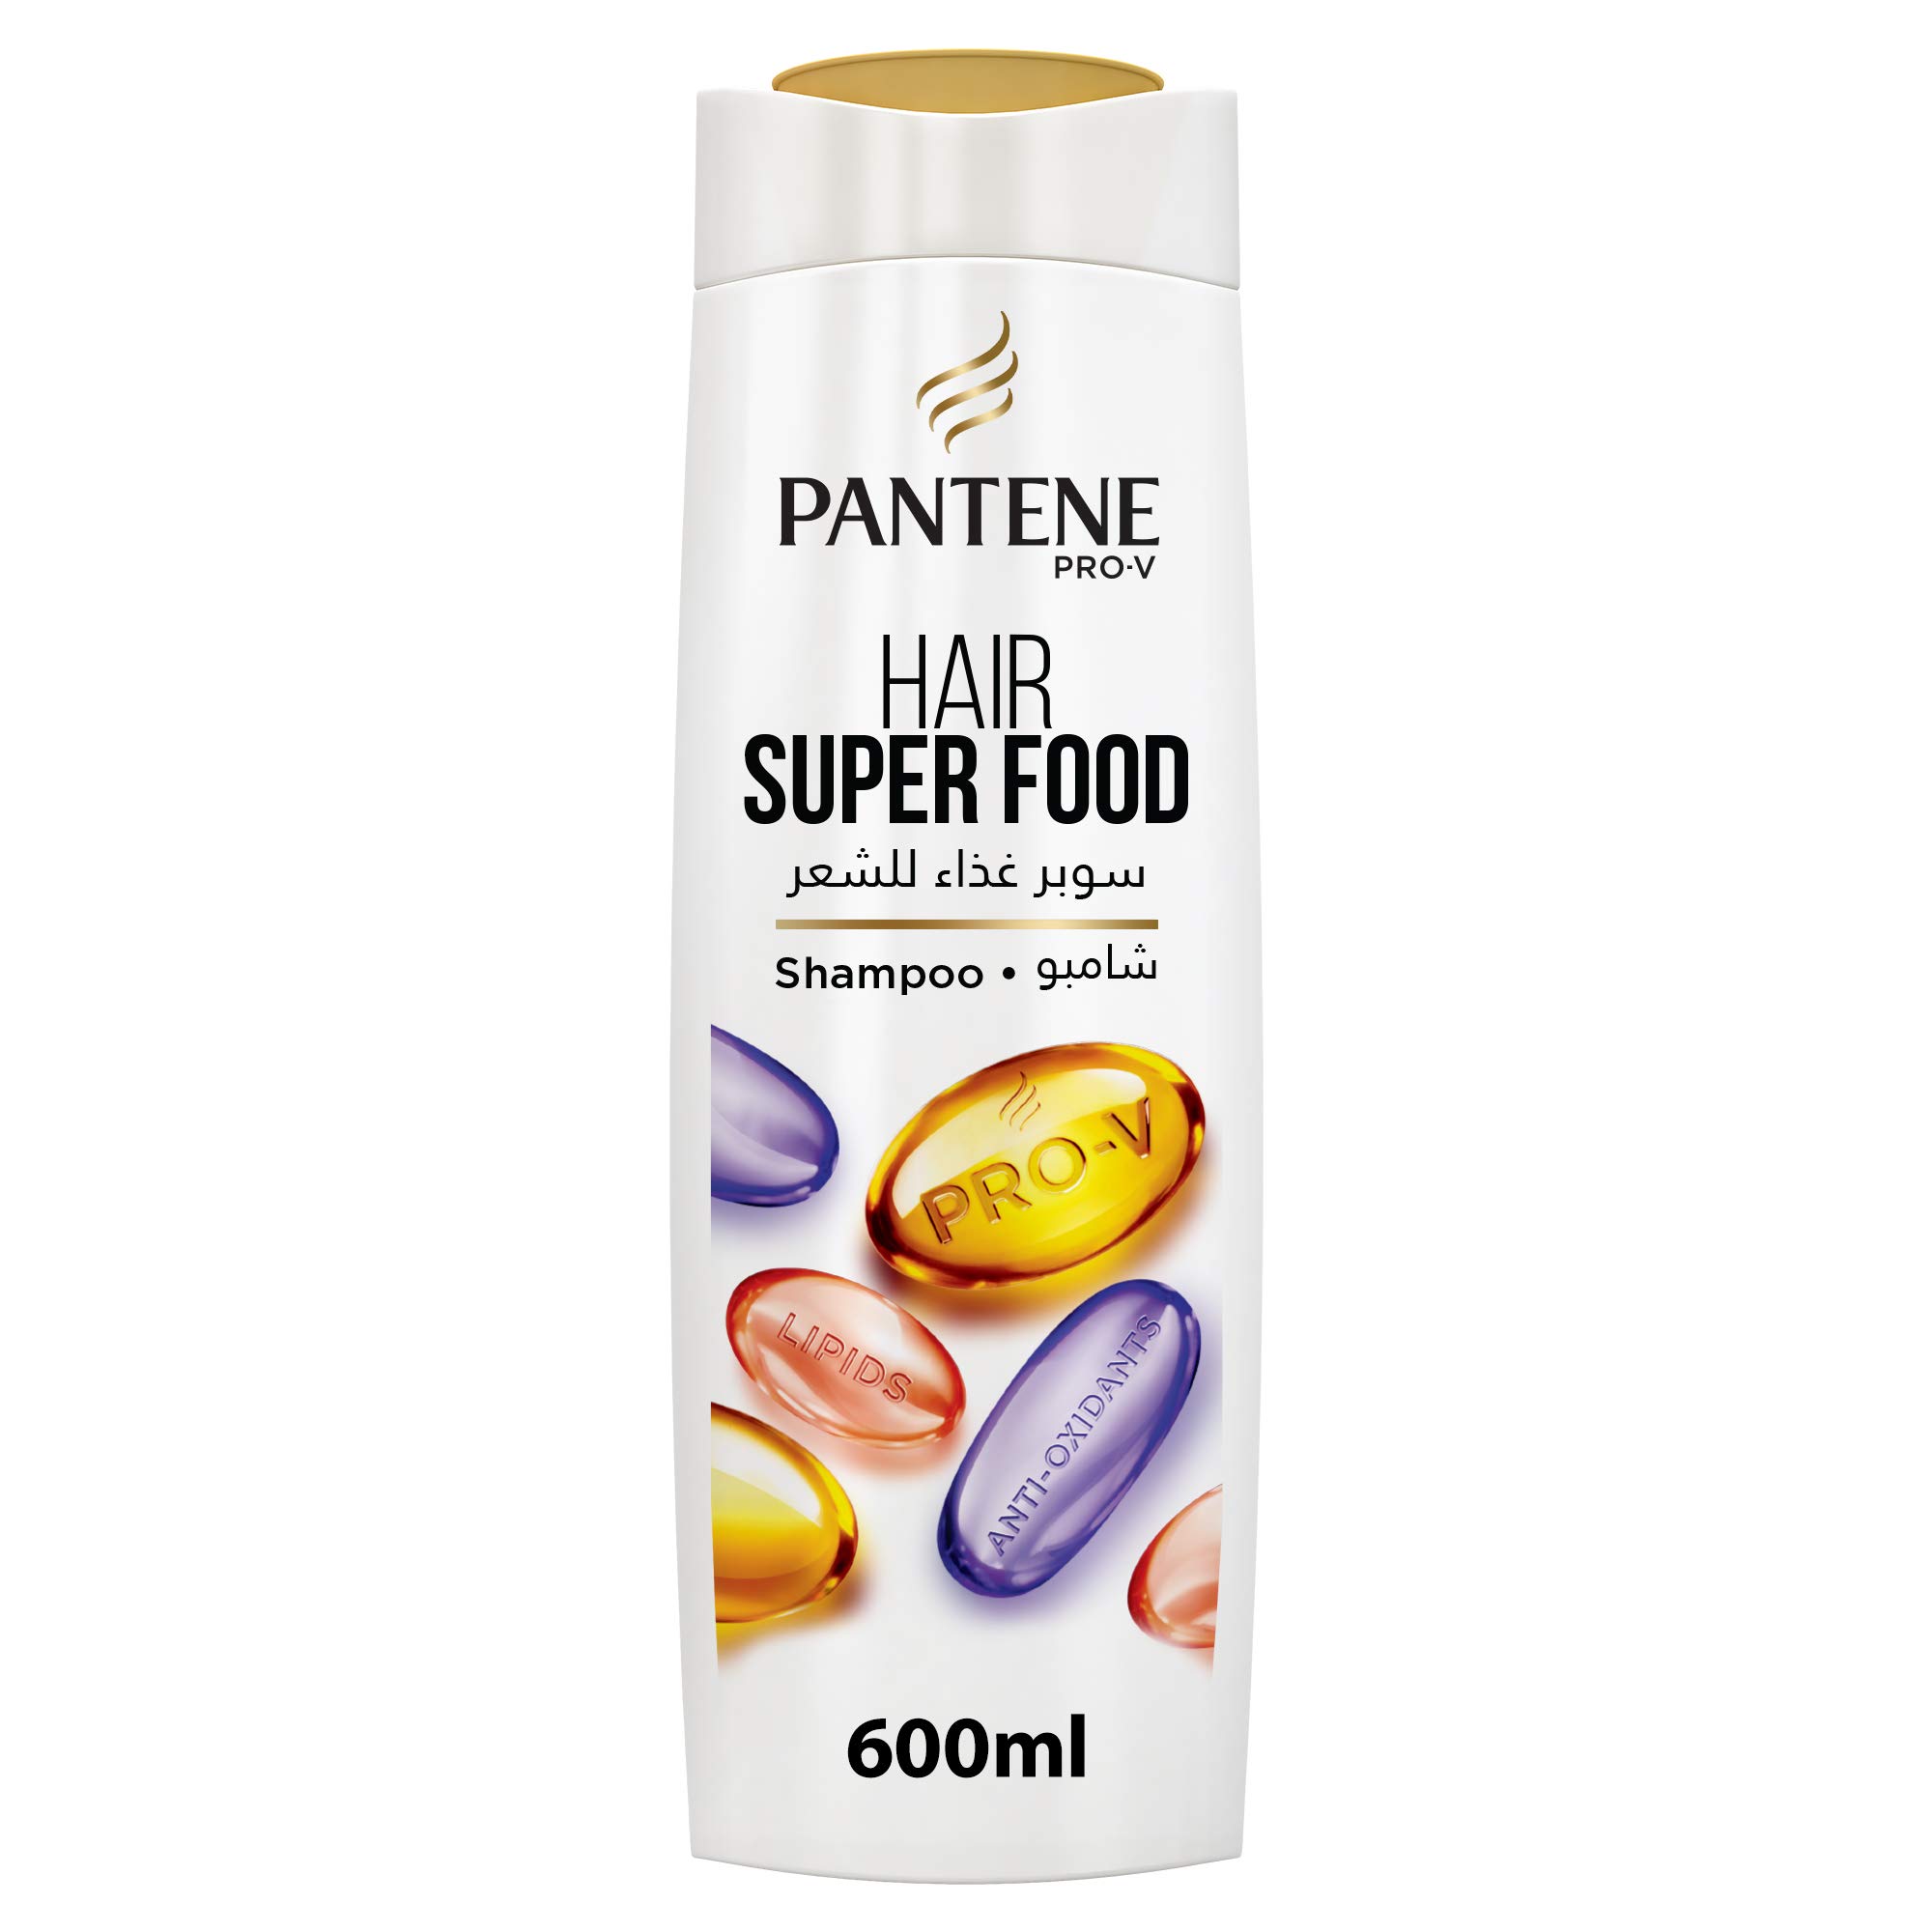 szampon pantene superfood